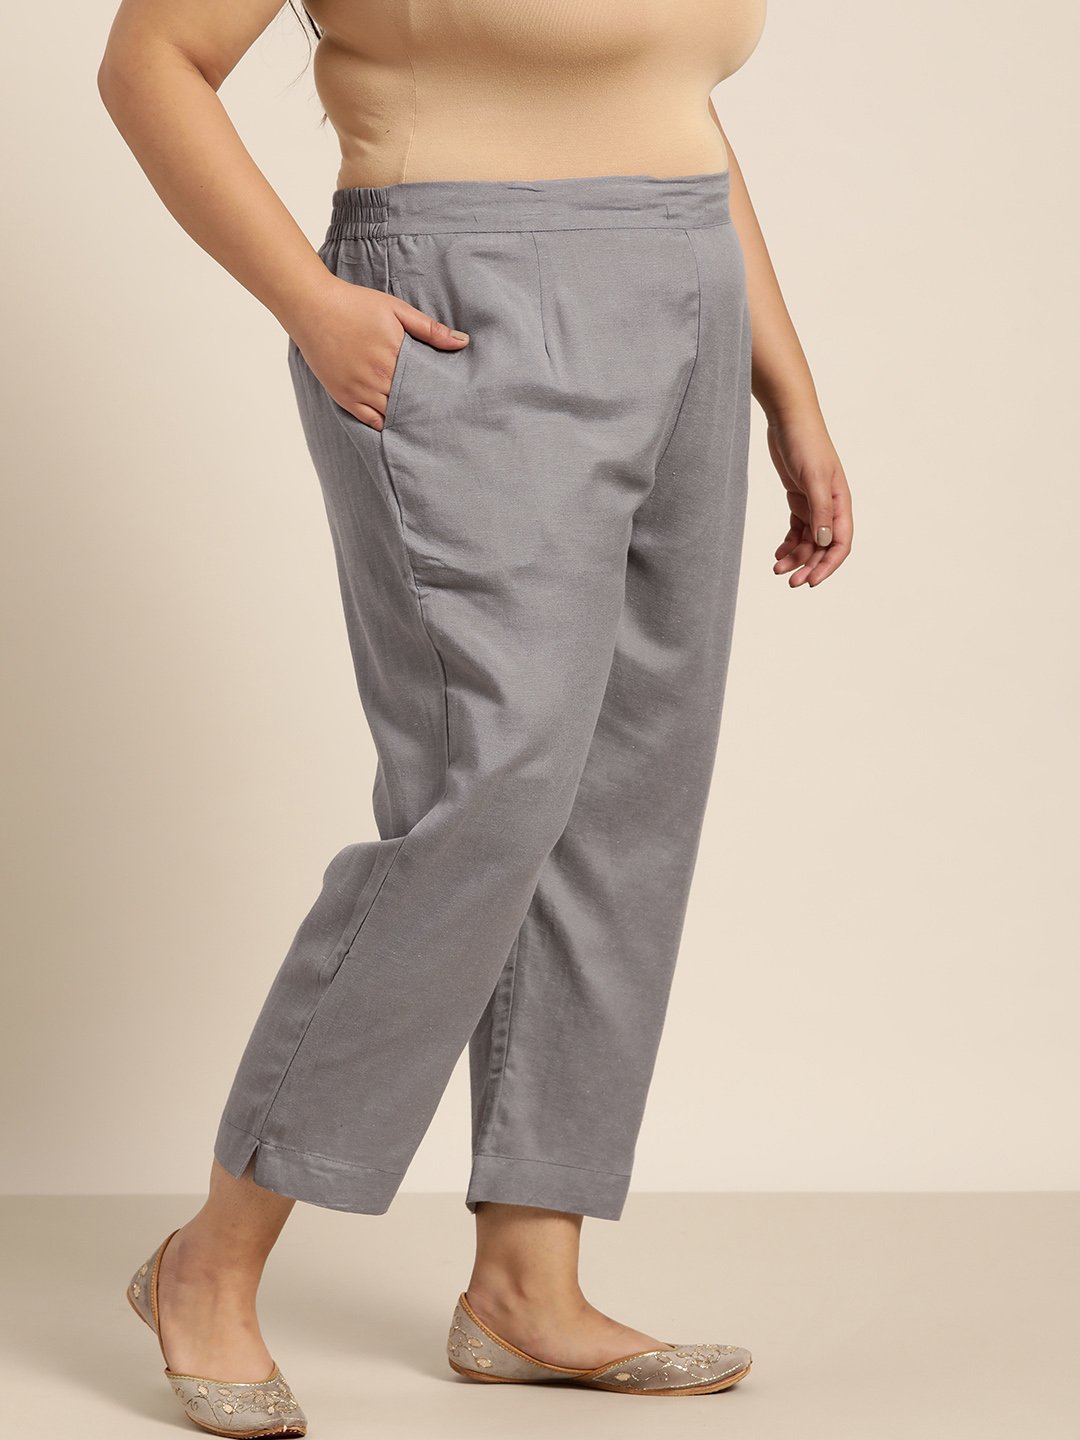 Women's Rayon Solid Cigarette Pants - Juniper